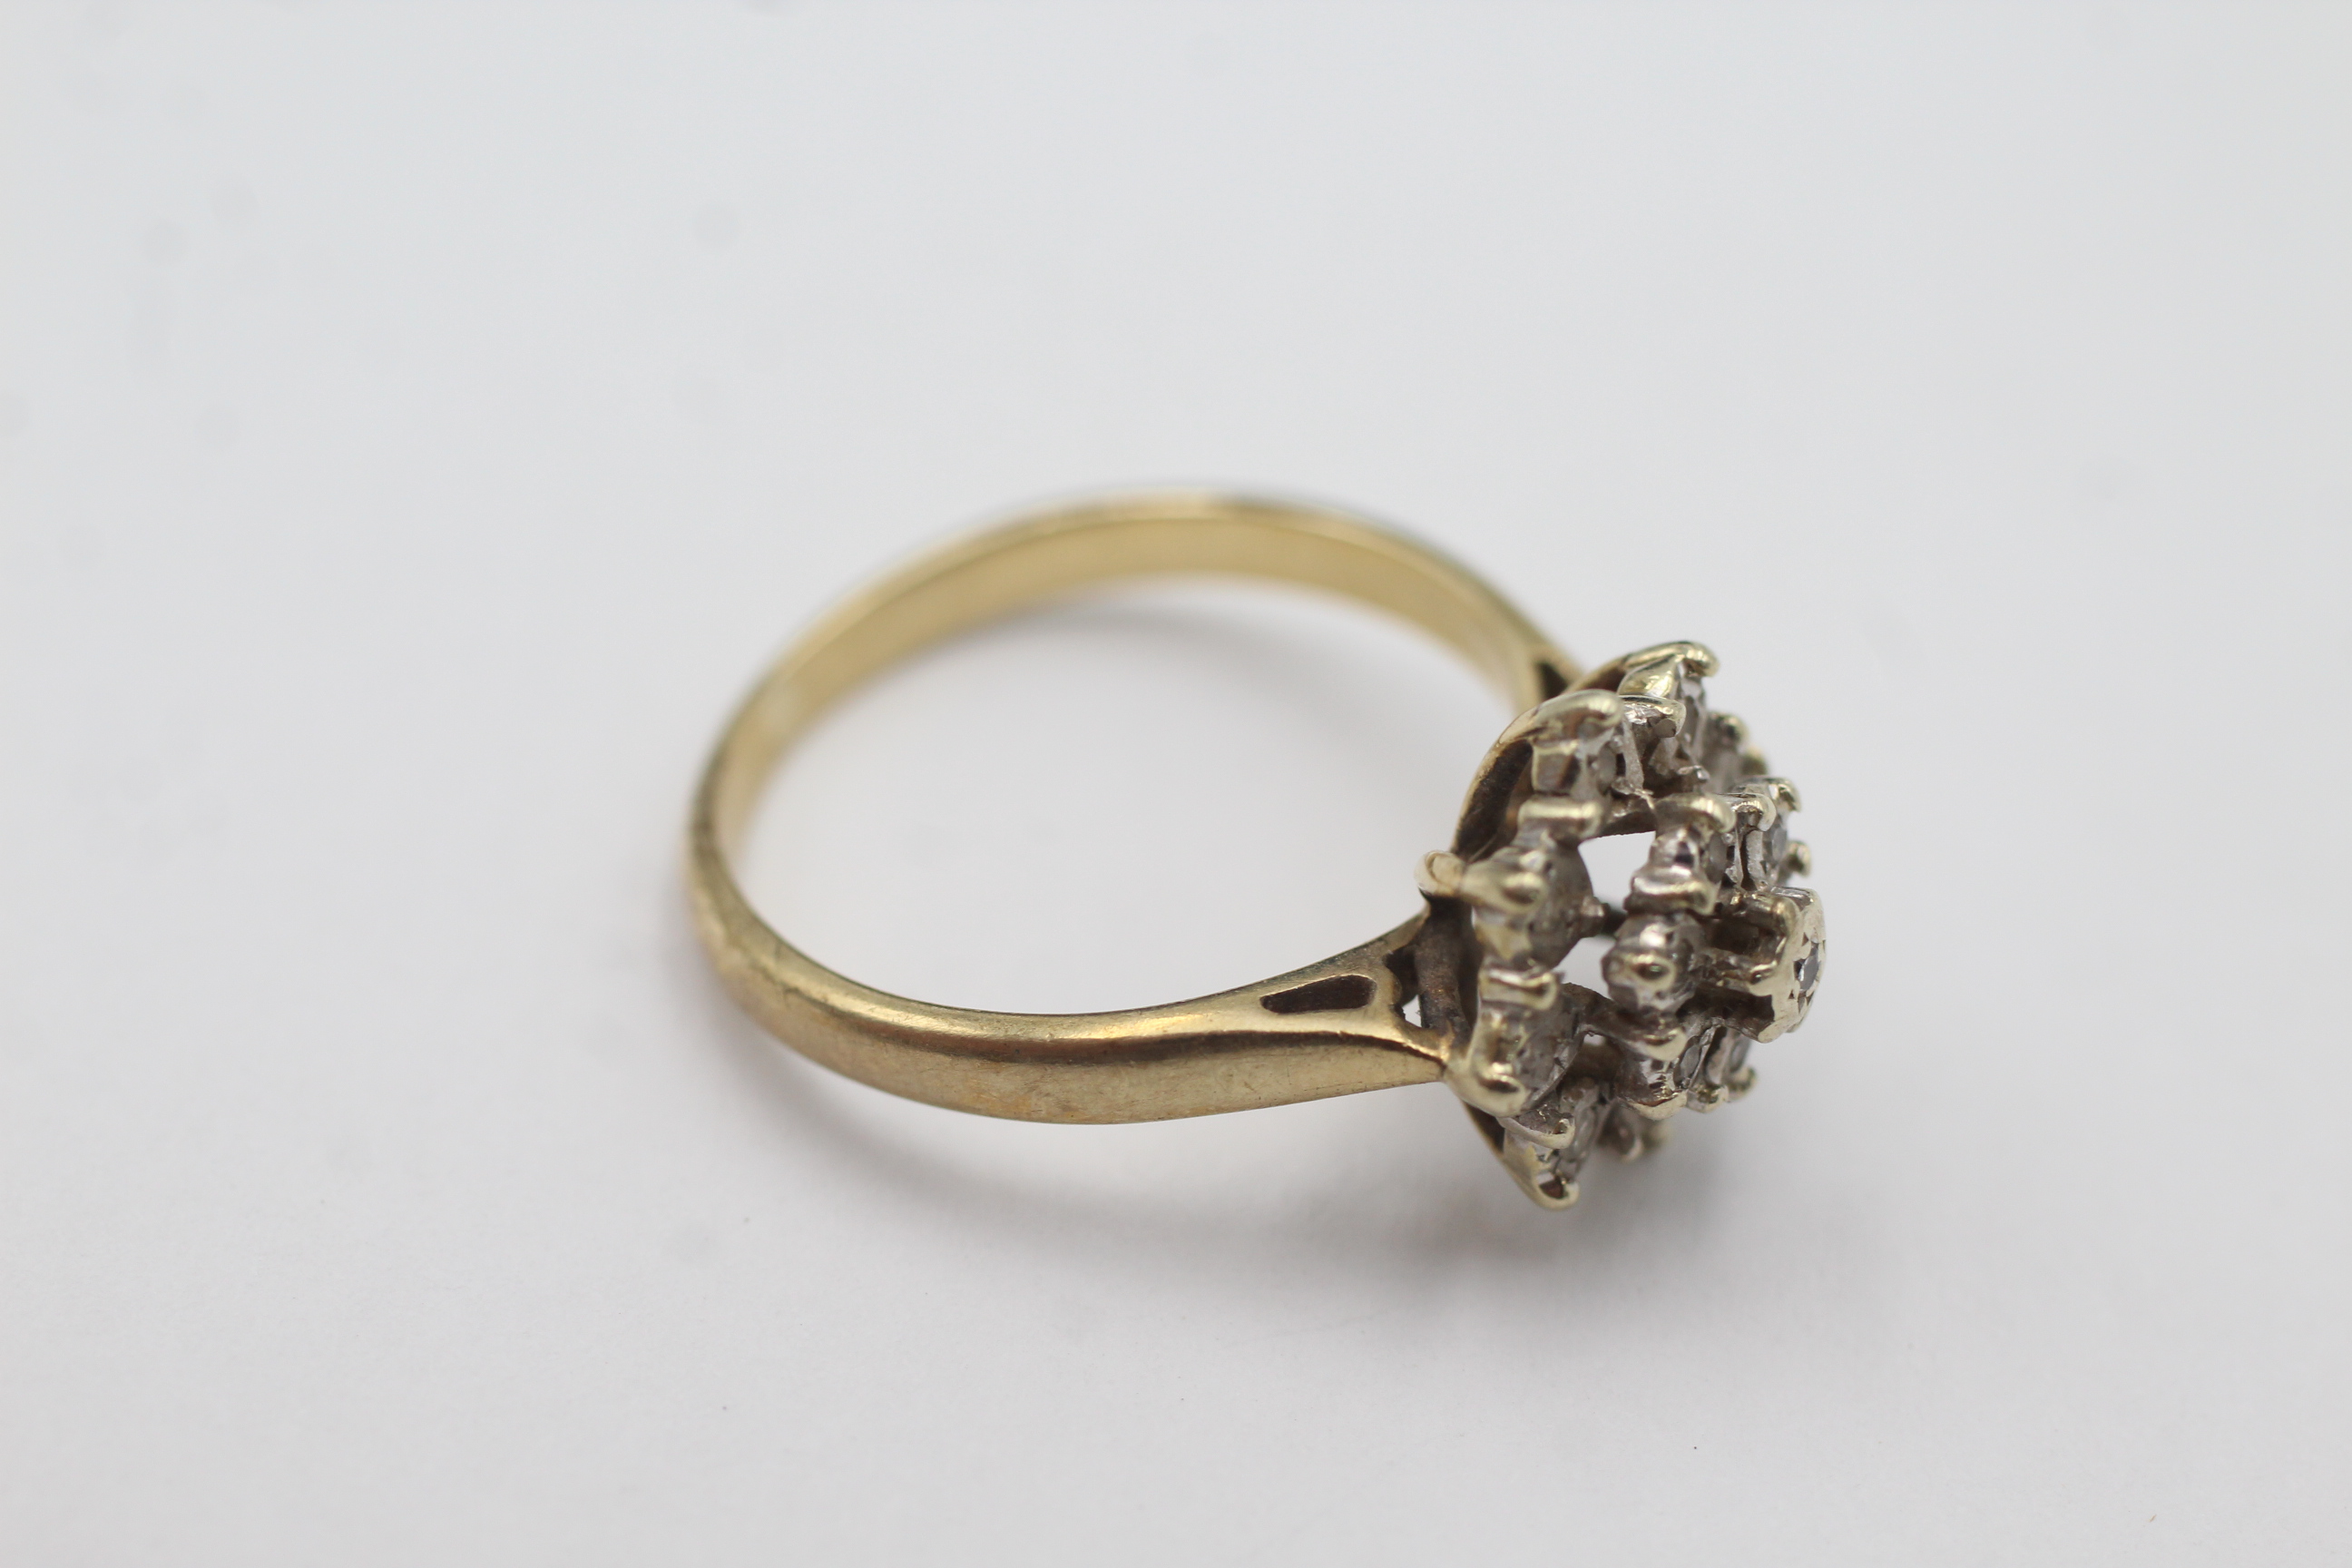 9ct gold diamond dress ring (3g) - Image 4 of 4